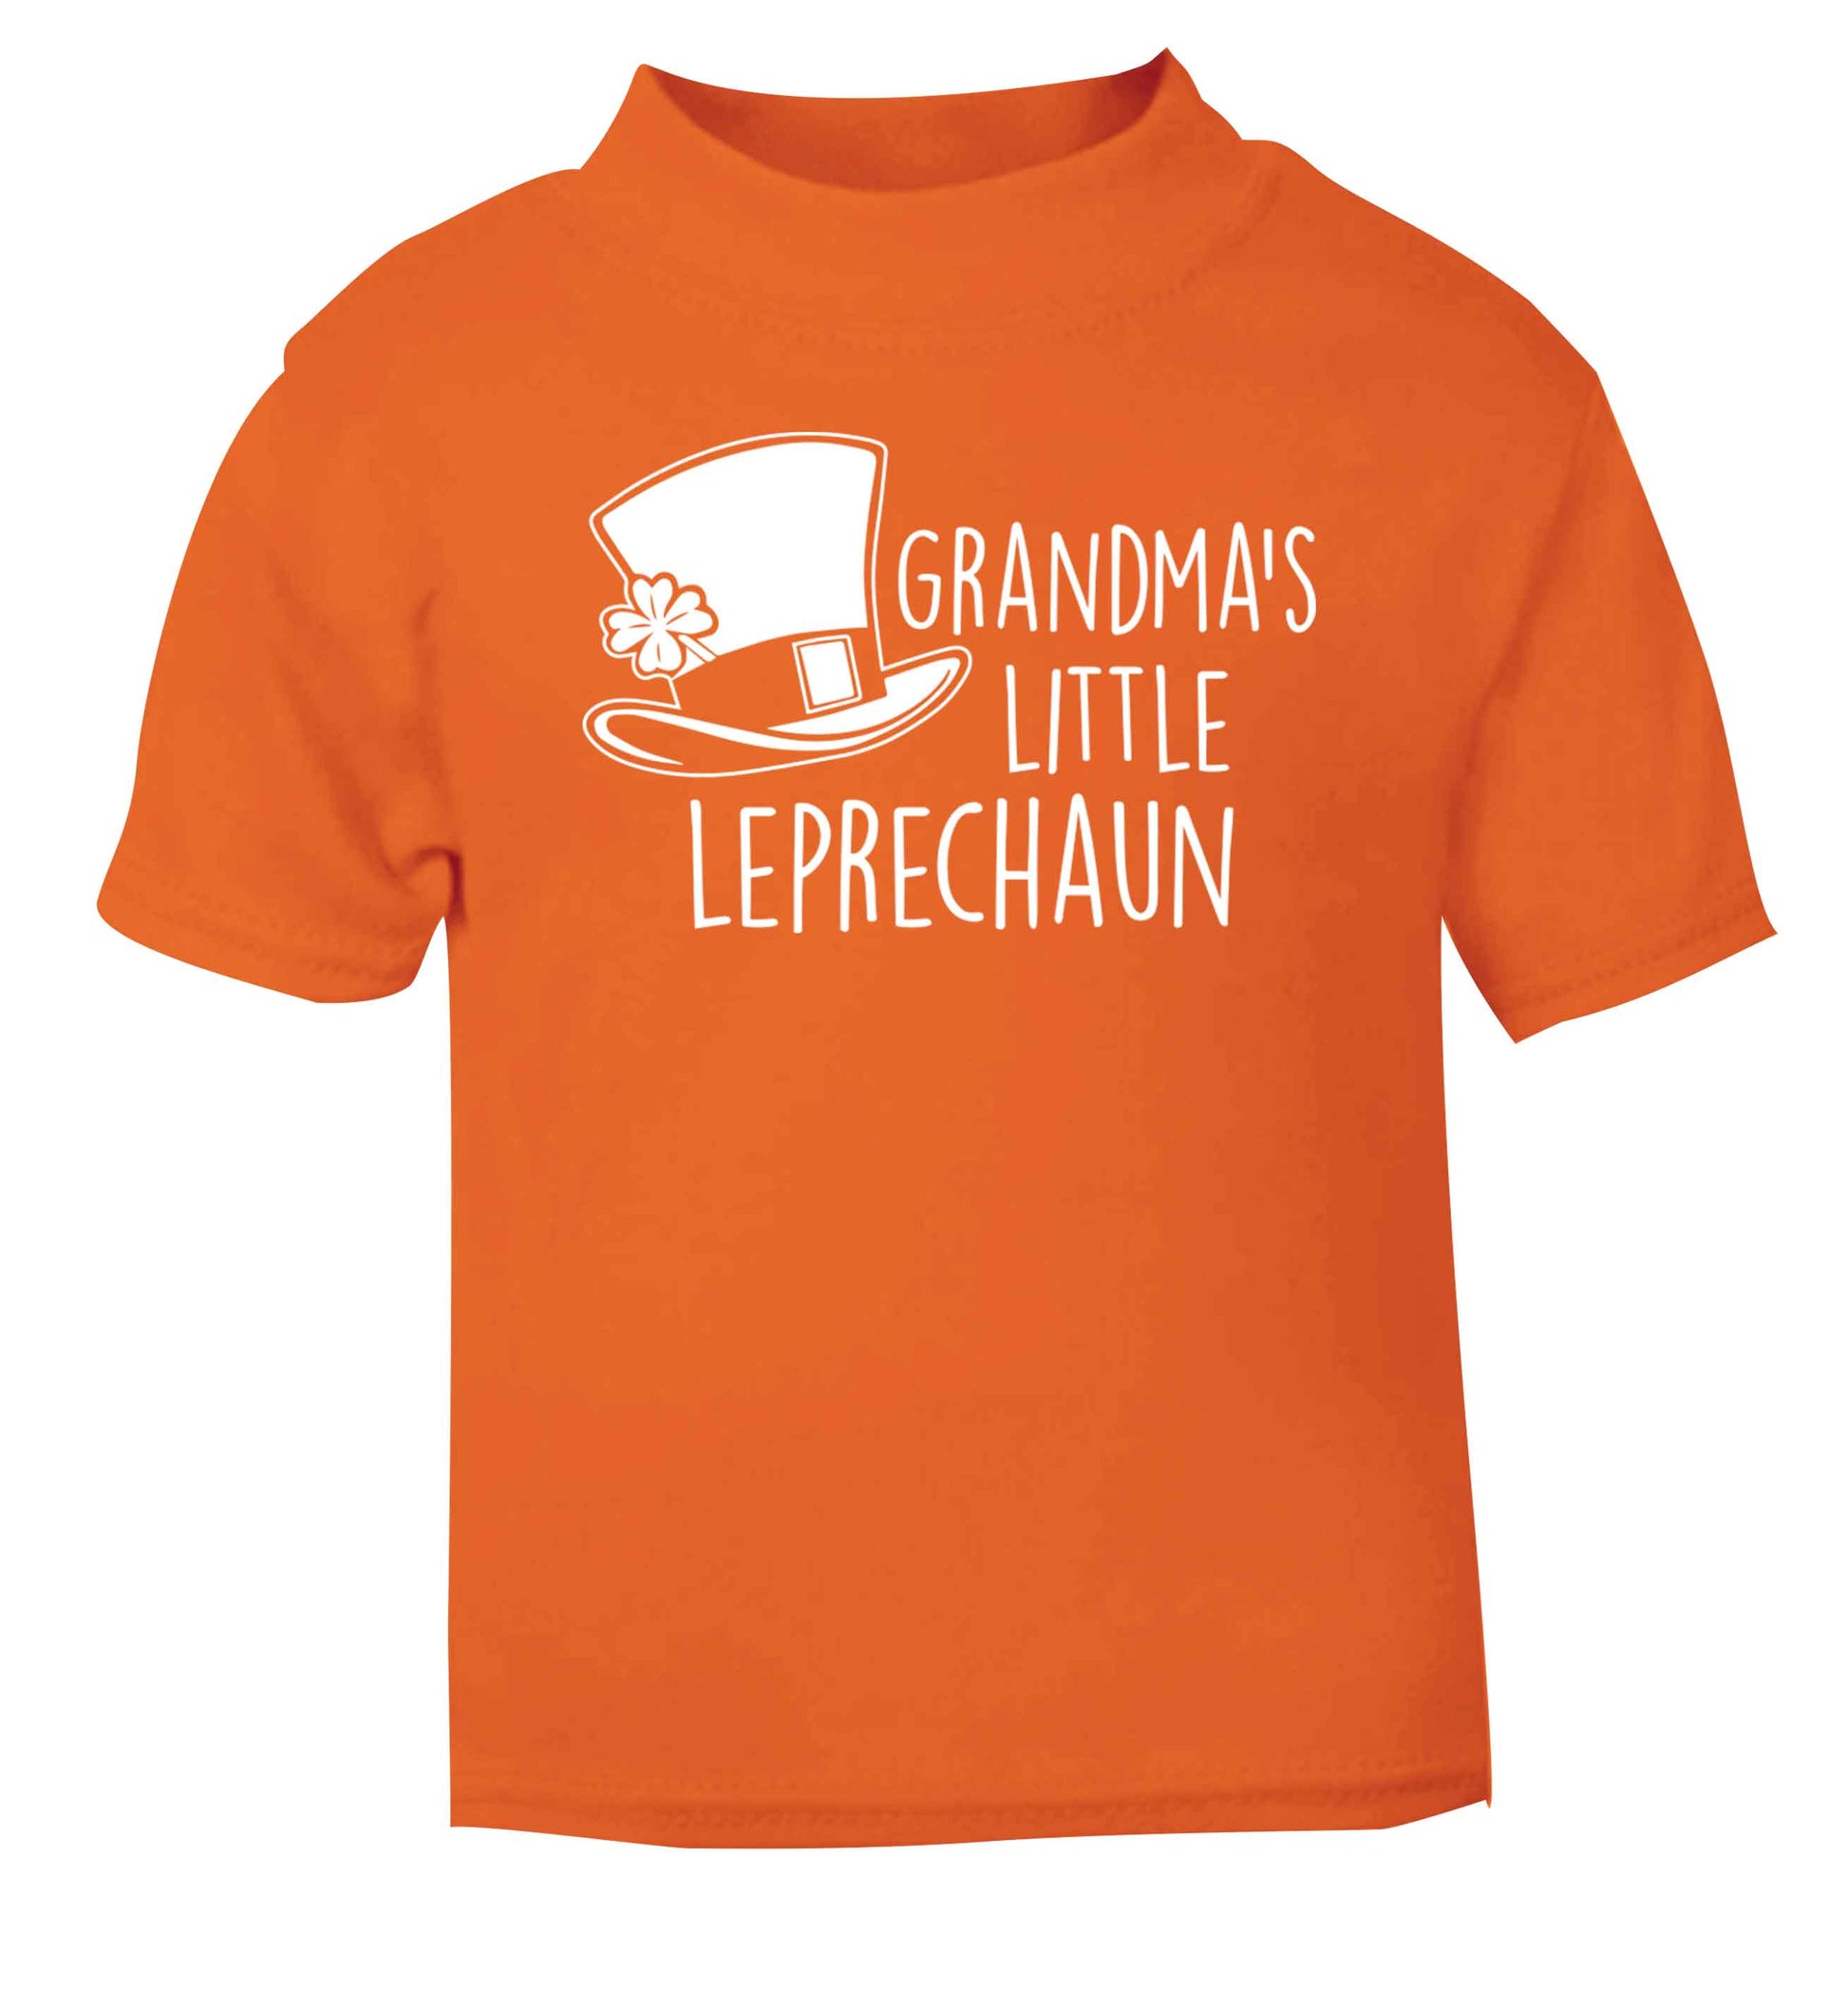 Grandma's little leprechaun orange baby toddler Tshirt 2 Years